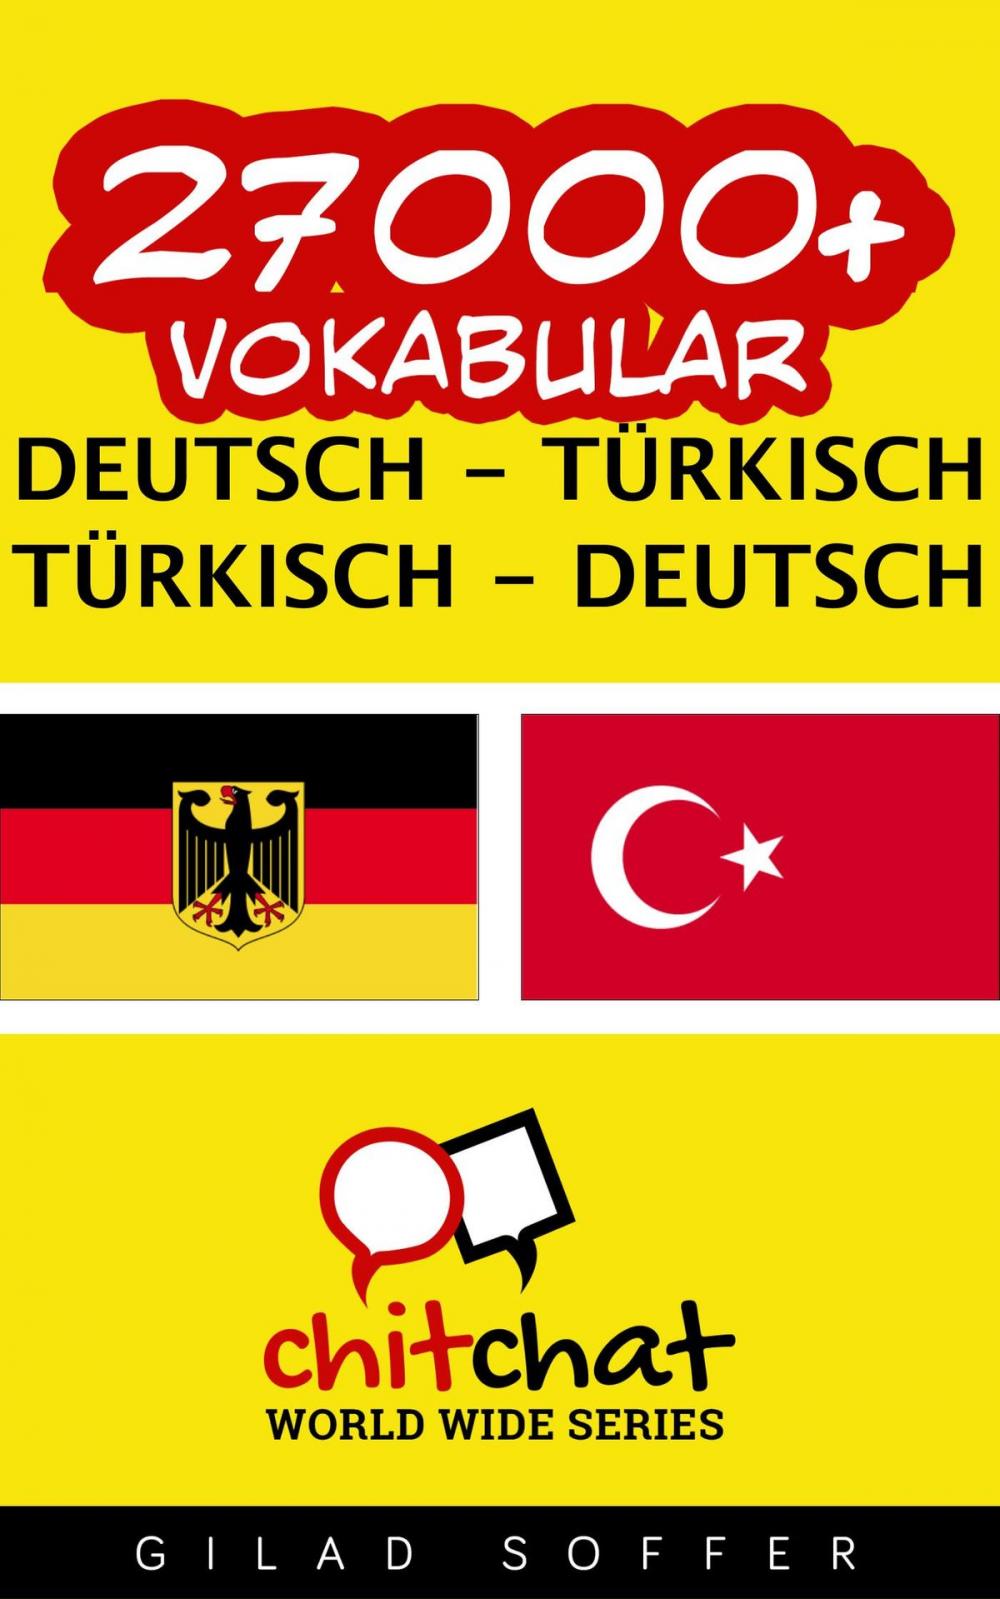 Big bigCover of 27000+ Vokabular Deutsch - Türkisch